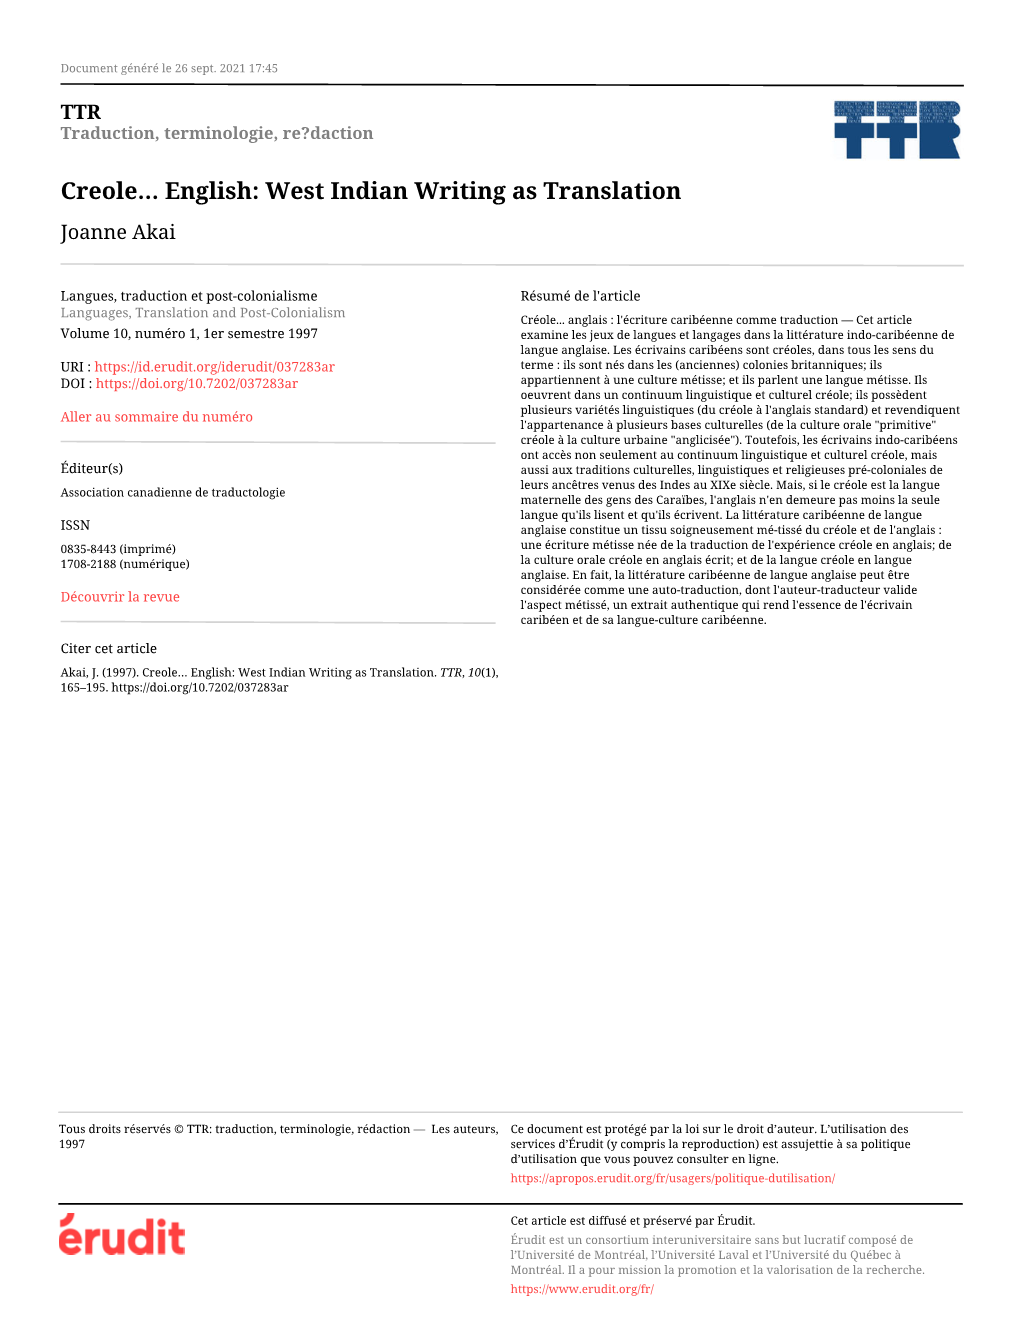 Creole… English: West Indian Writing As Translation Joanne Akai